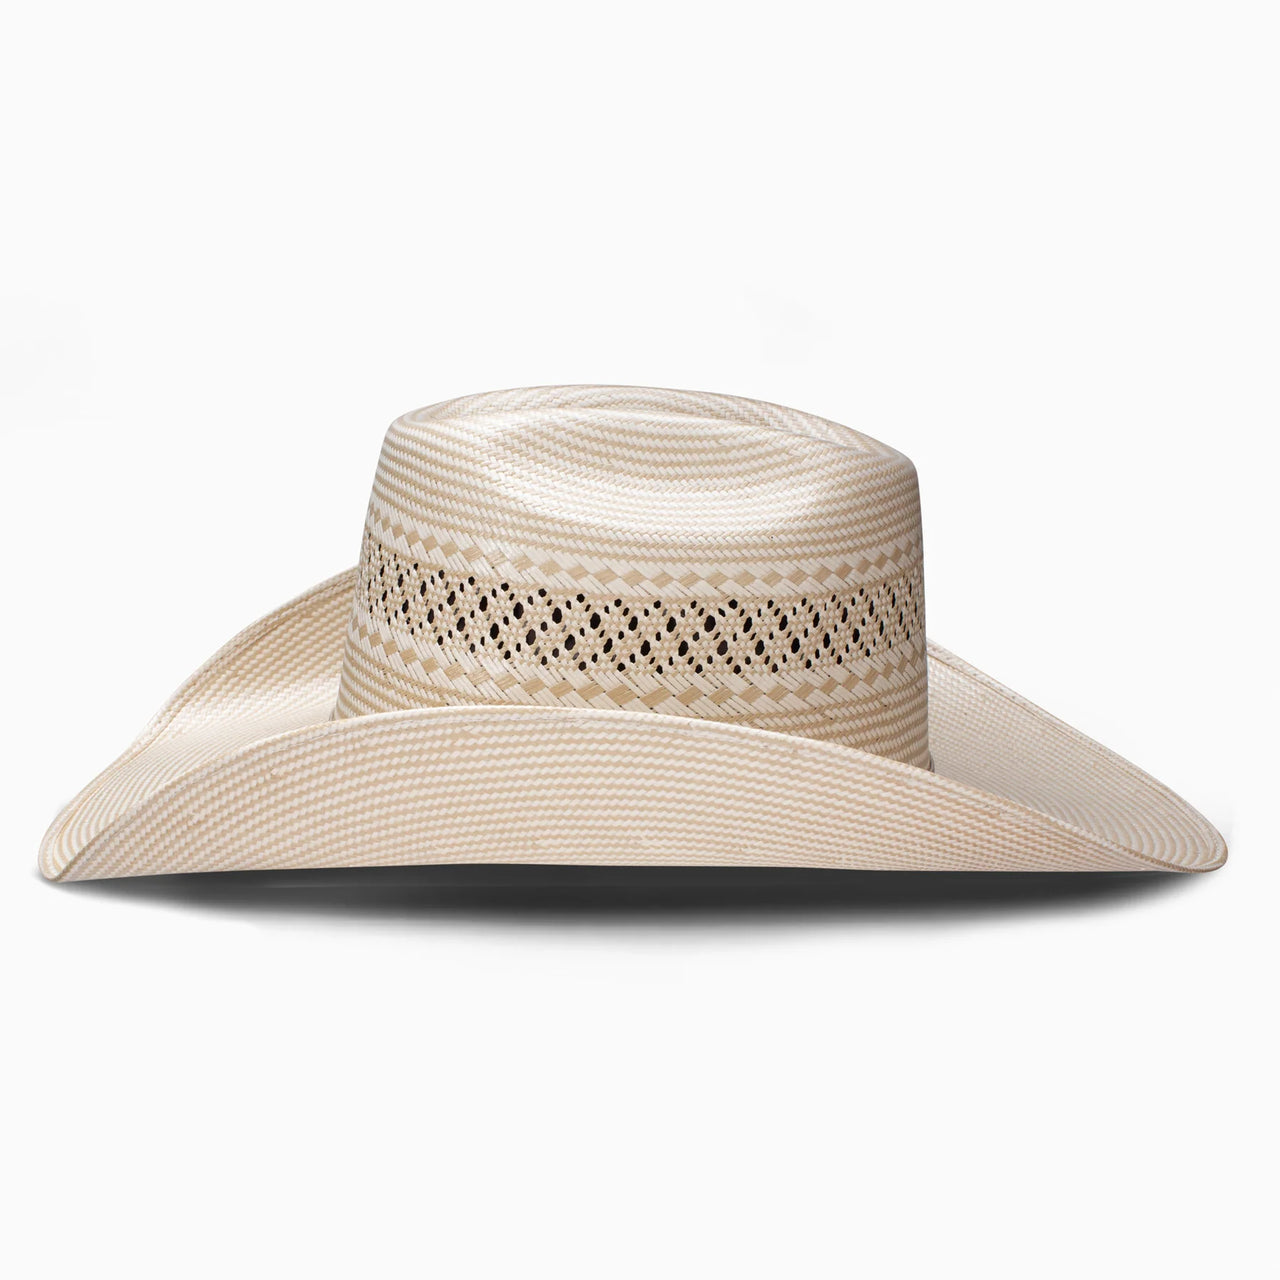 Resistol 20X Cojo Special Cowboy Hat - Natural/Tan